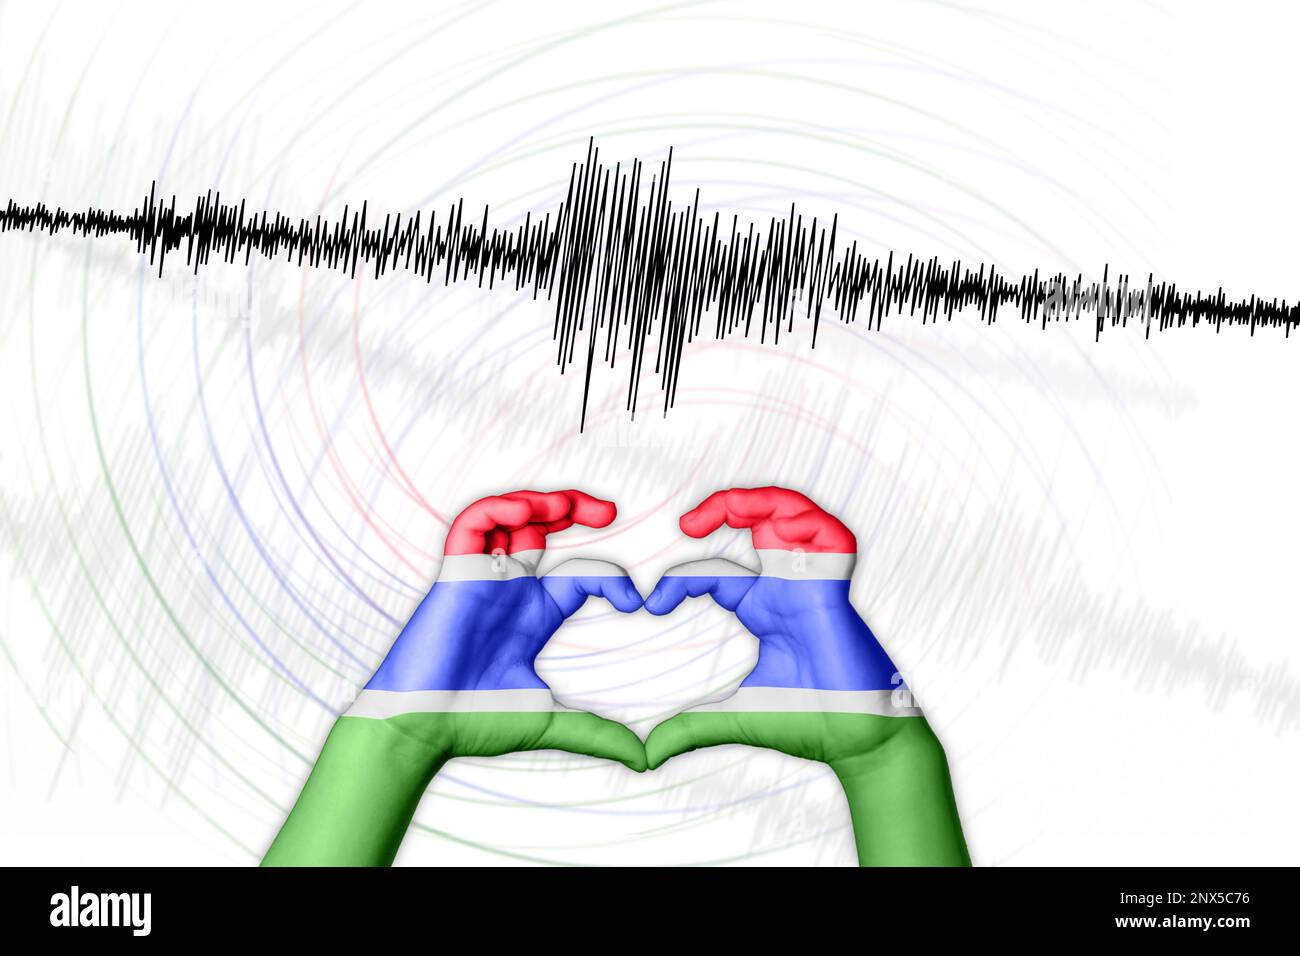 Erdbeben Gambias Symbol der Heart Richter Scale Stockfoto